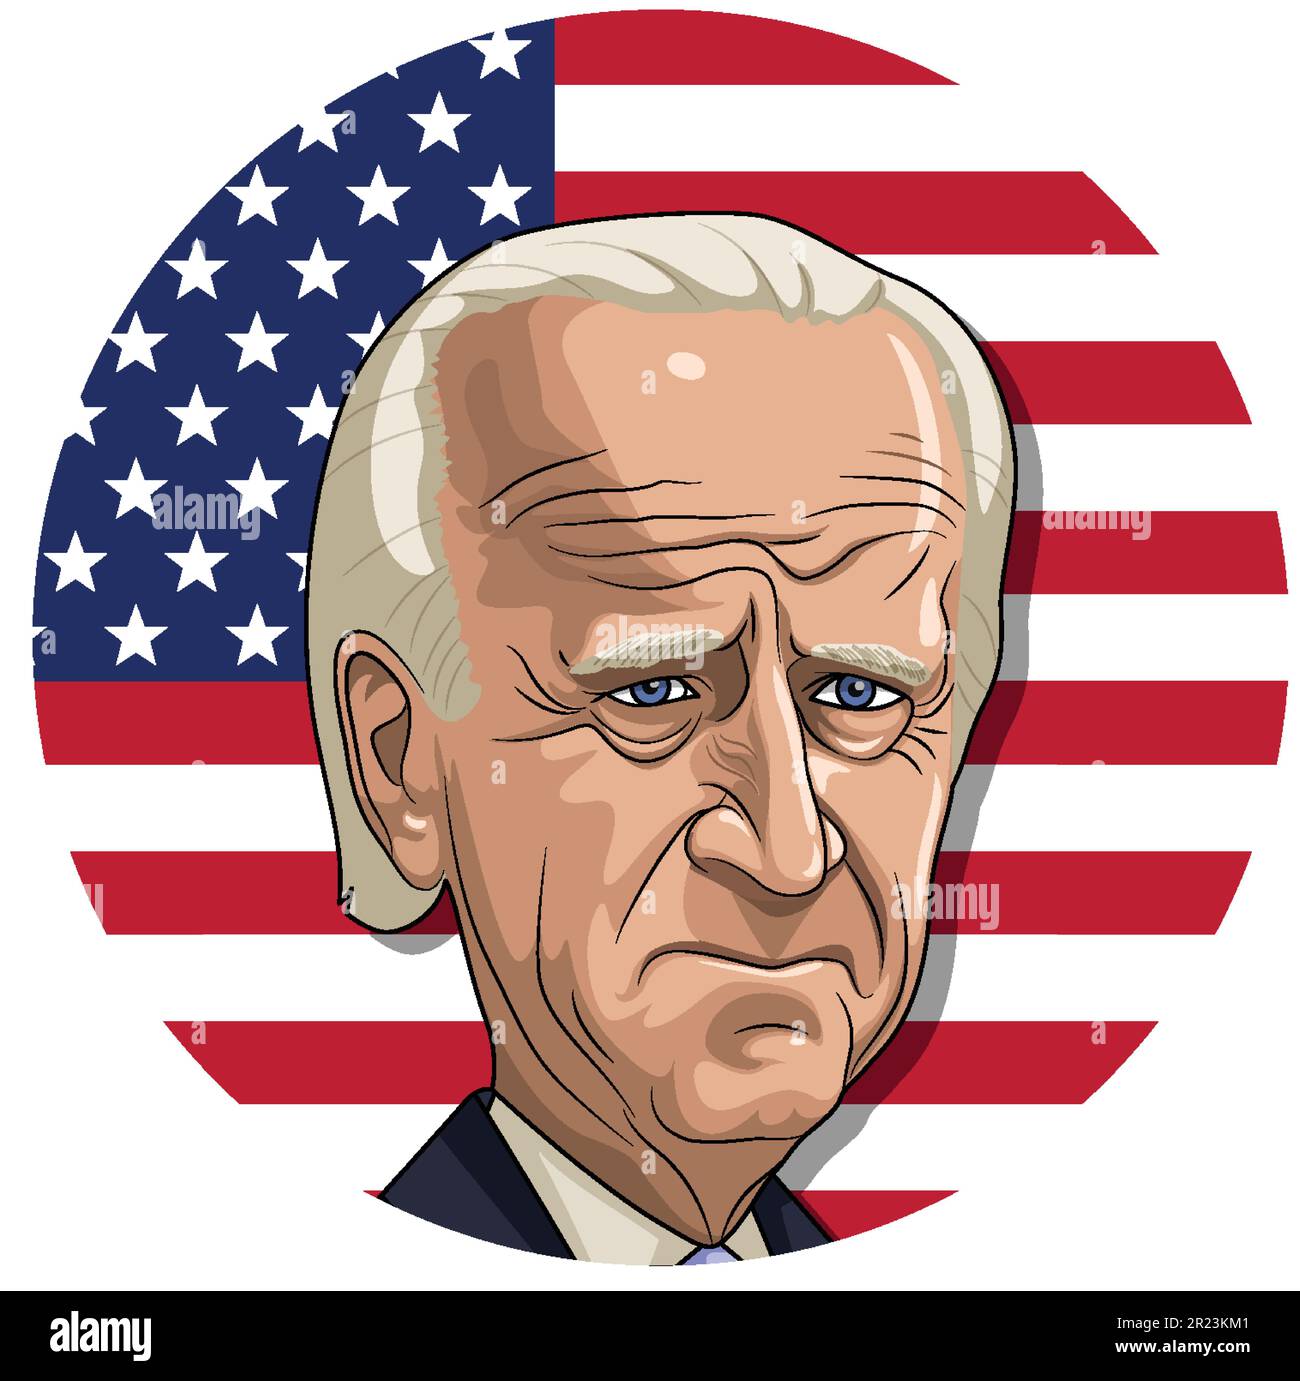 Joe Biden American politician with American flag portrait cartoon illustration Stock Vector